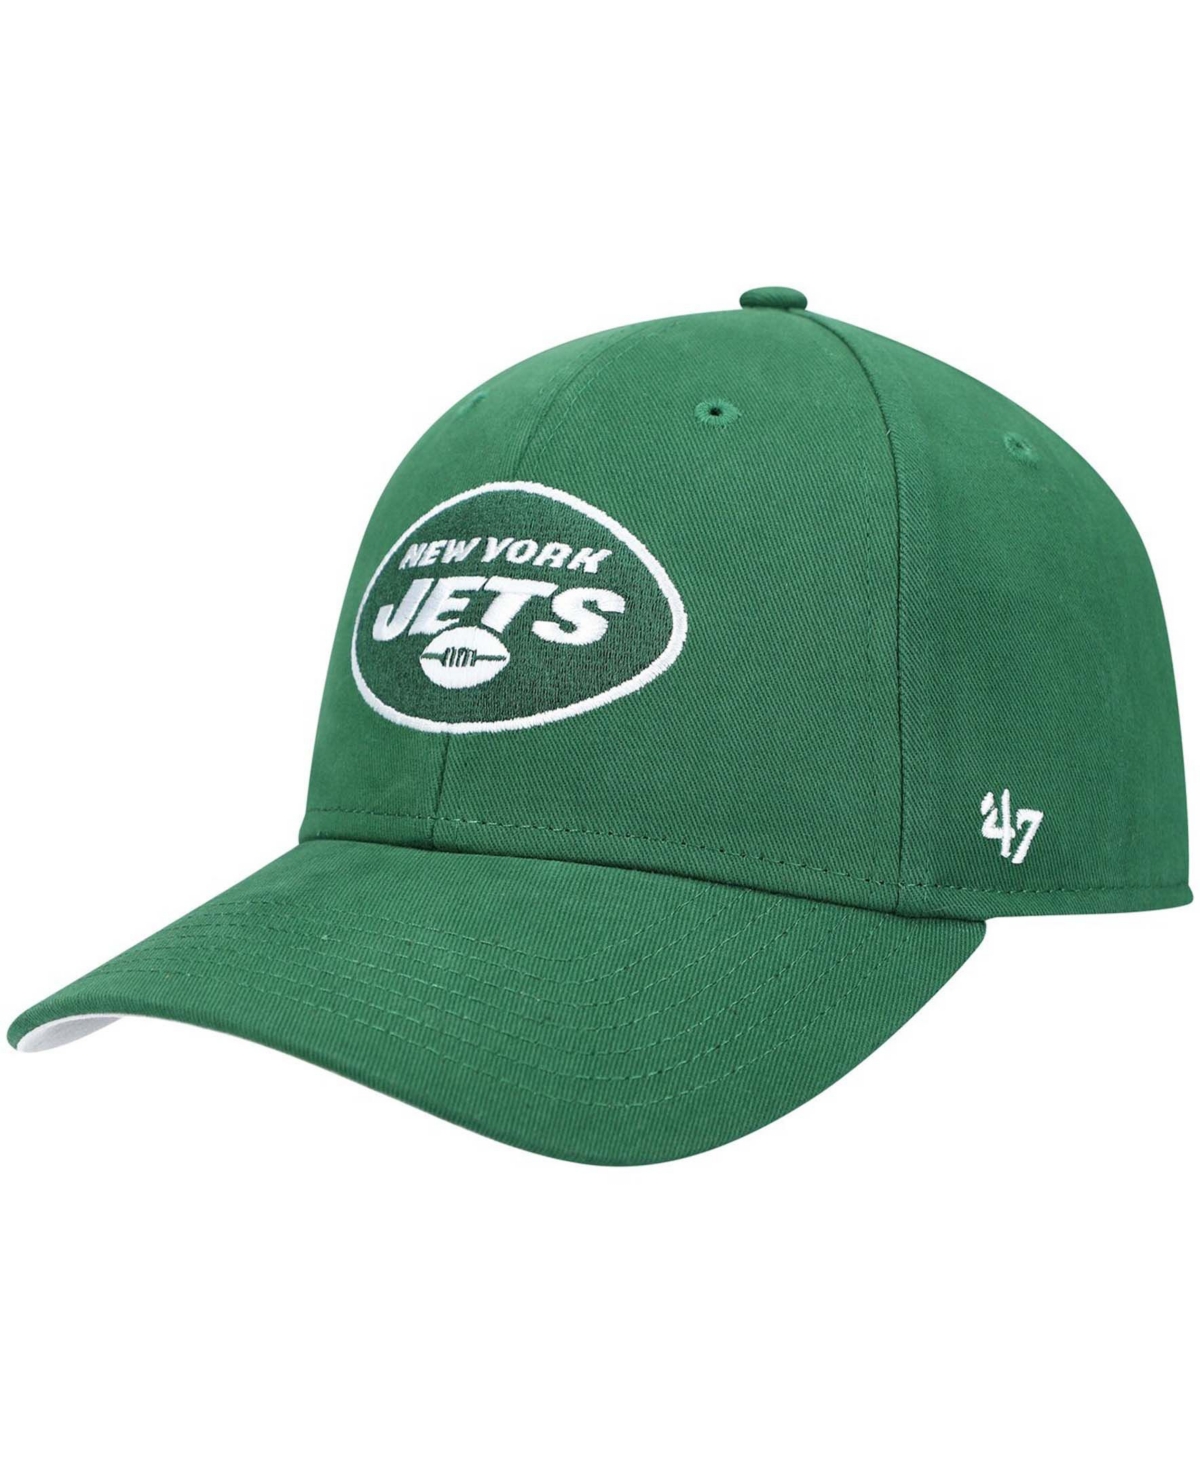 47 Brand Babies' Little Boys And Girls Green New York Jets Basic Team Mvp Adjustable Hat